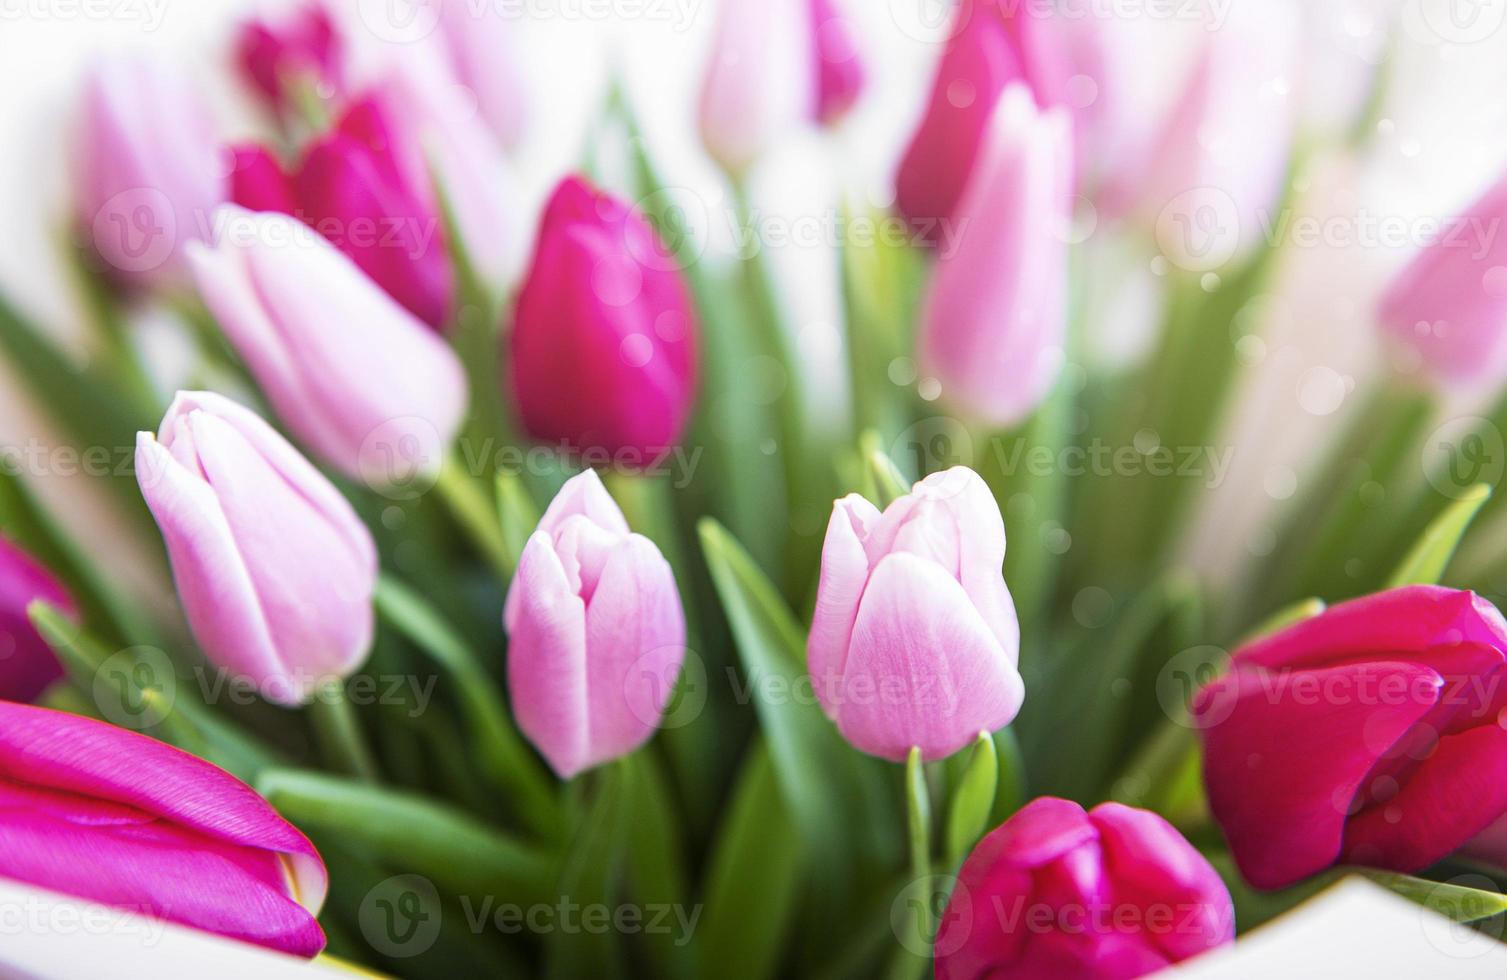 mooi tulpenboeket foto